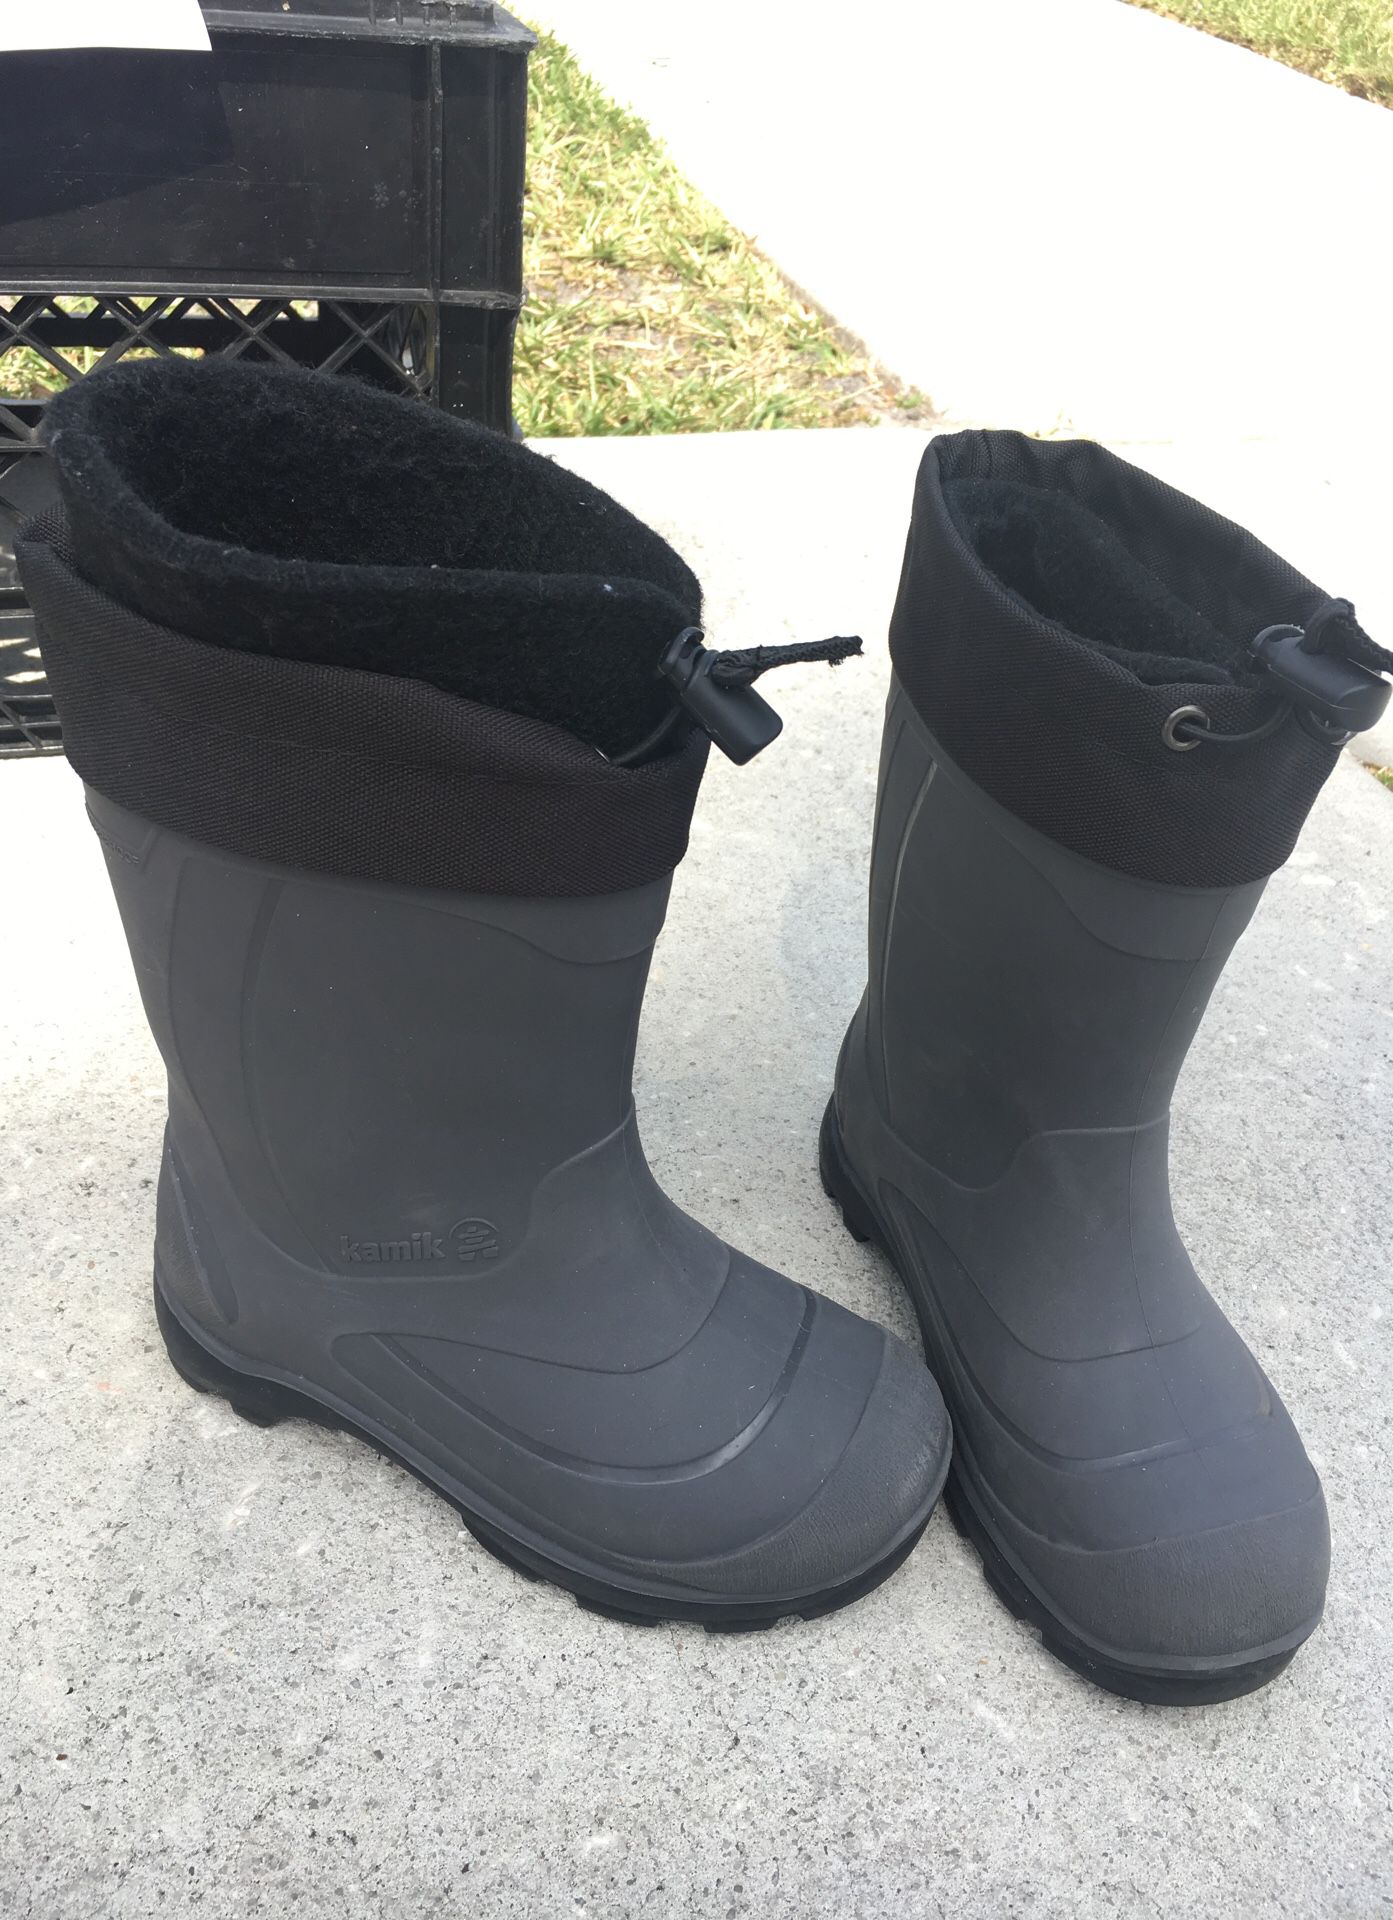 Kamik size 13 kids snow boots